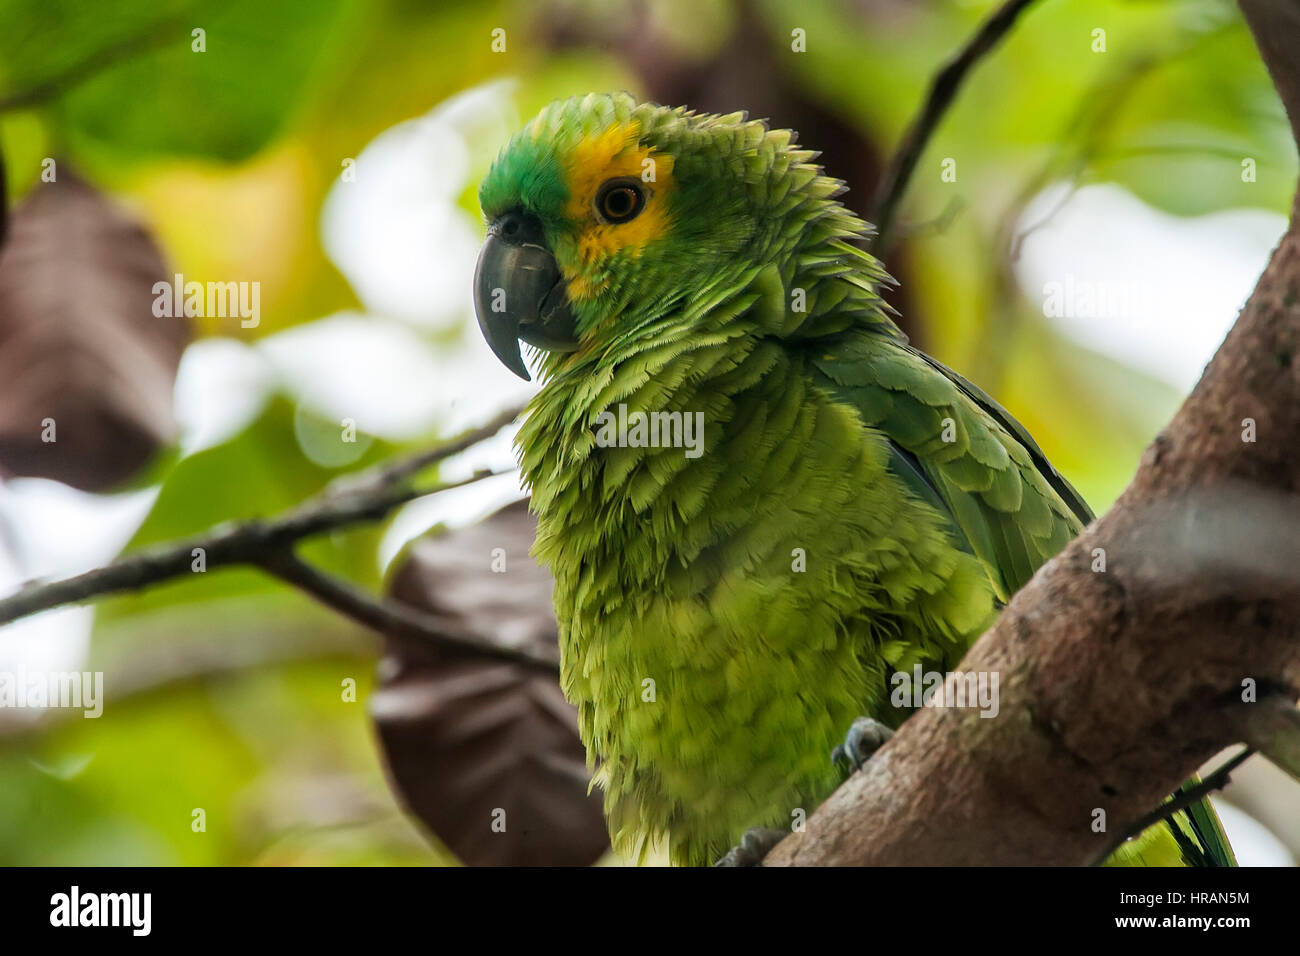 Blau-fronted Parrot (Amazona Aestiva) fotografiert im Sooretama, Espírito Santo - Südosten von Brasilien. Atlantischer Regenwald Biom. Stockfoto